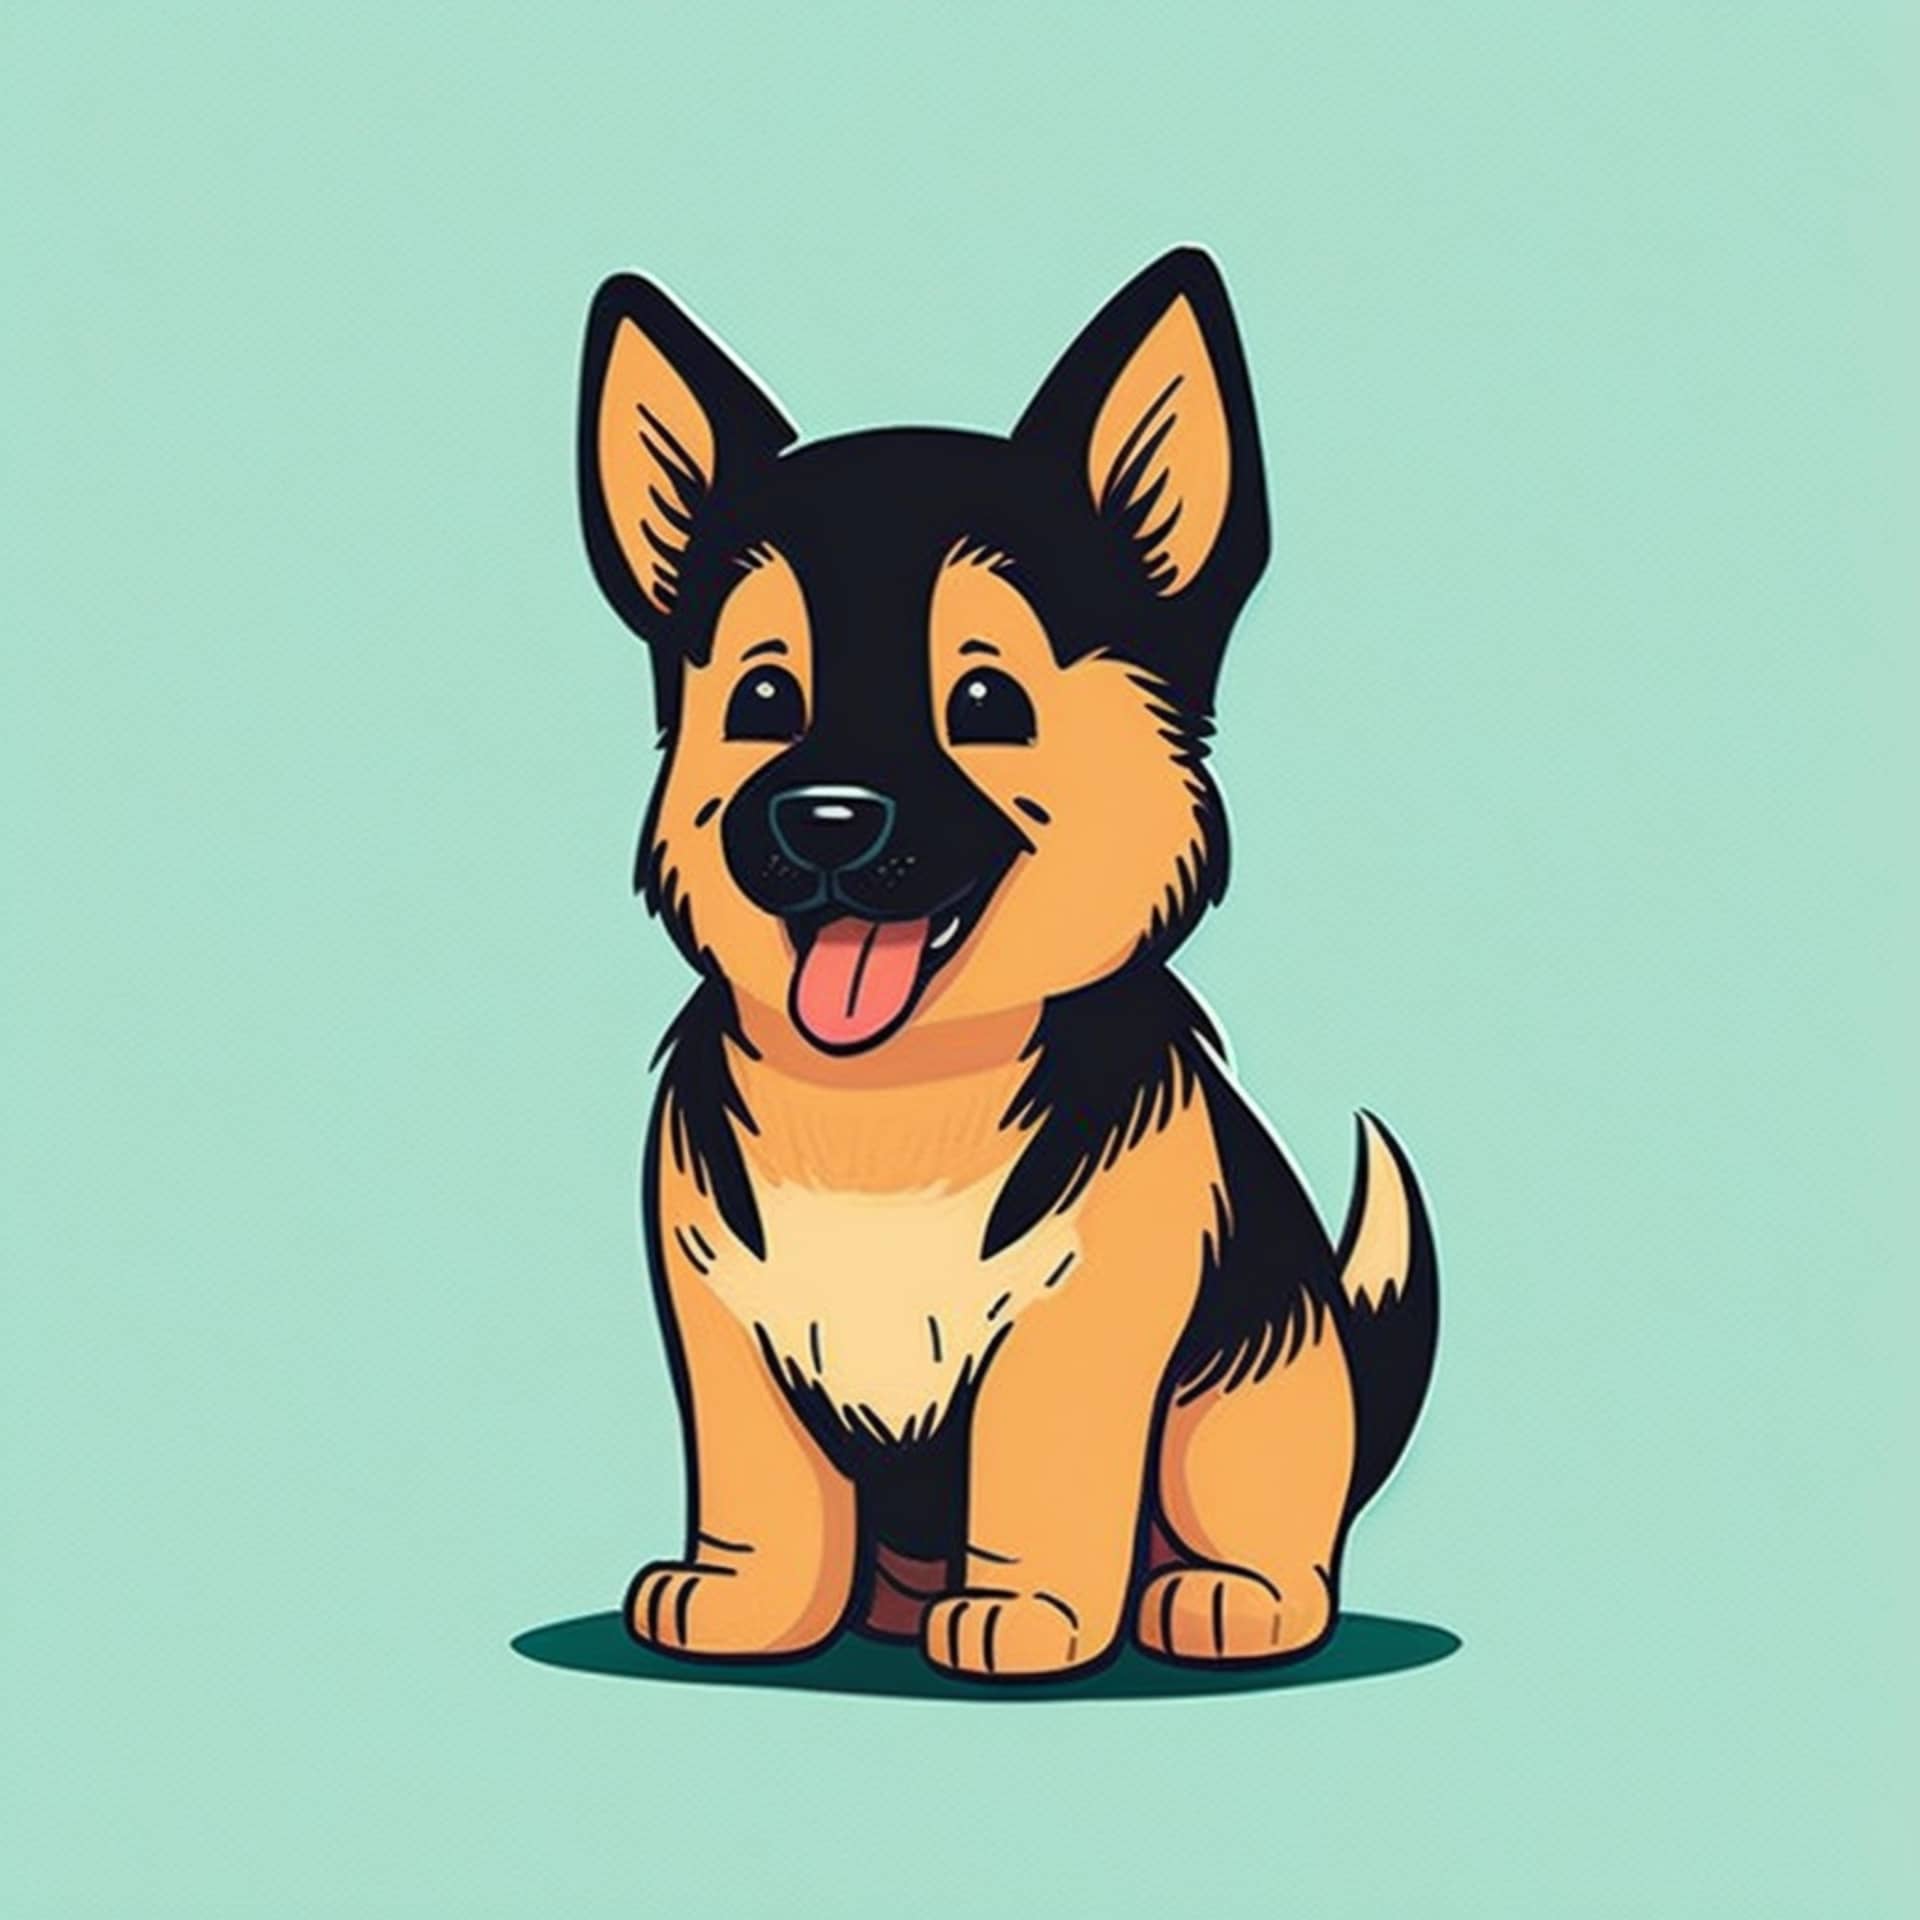 Cute dog cartoon icon illustration atmospheric image